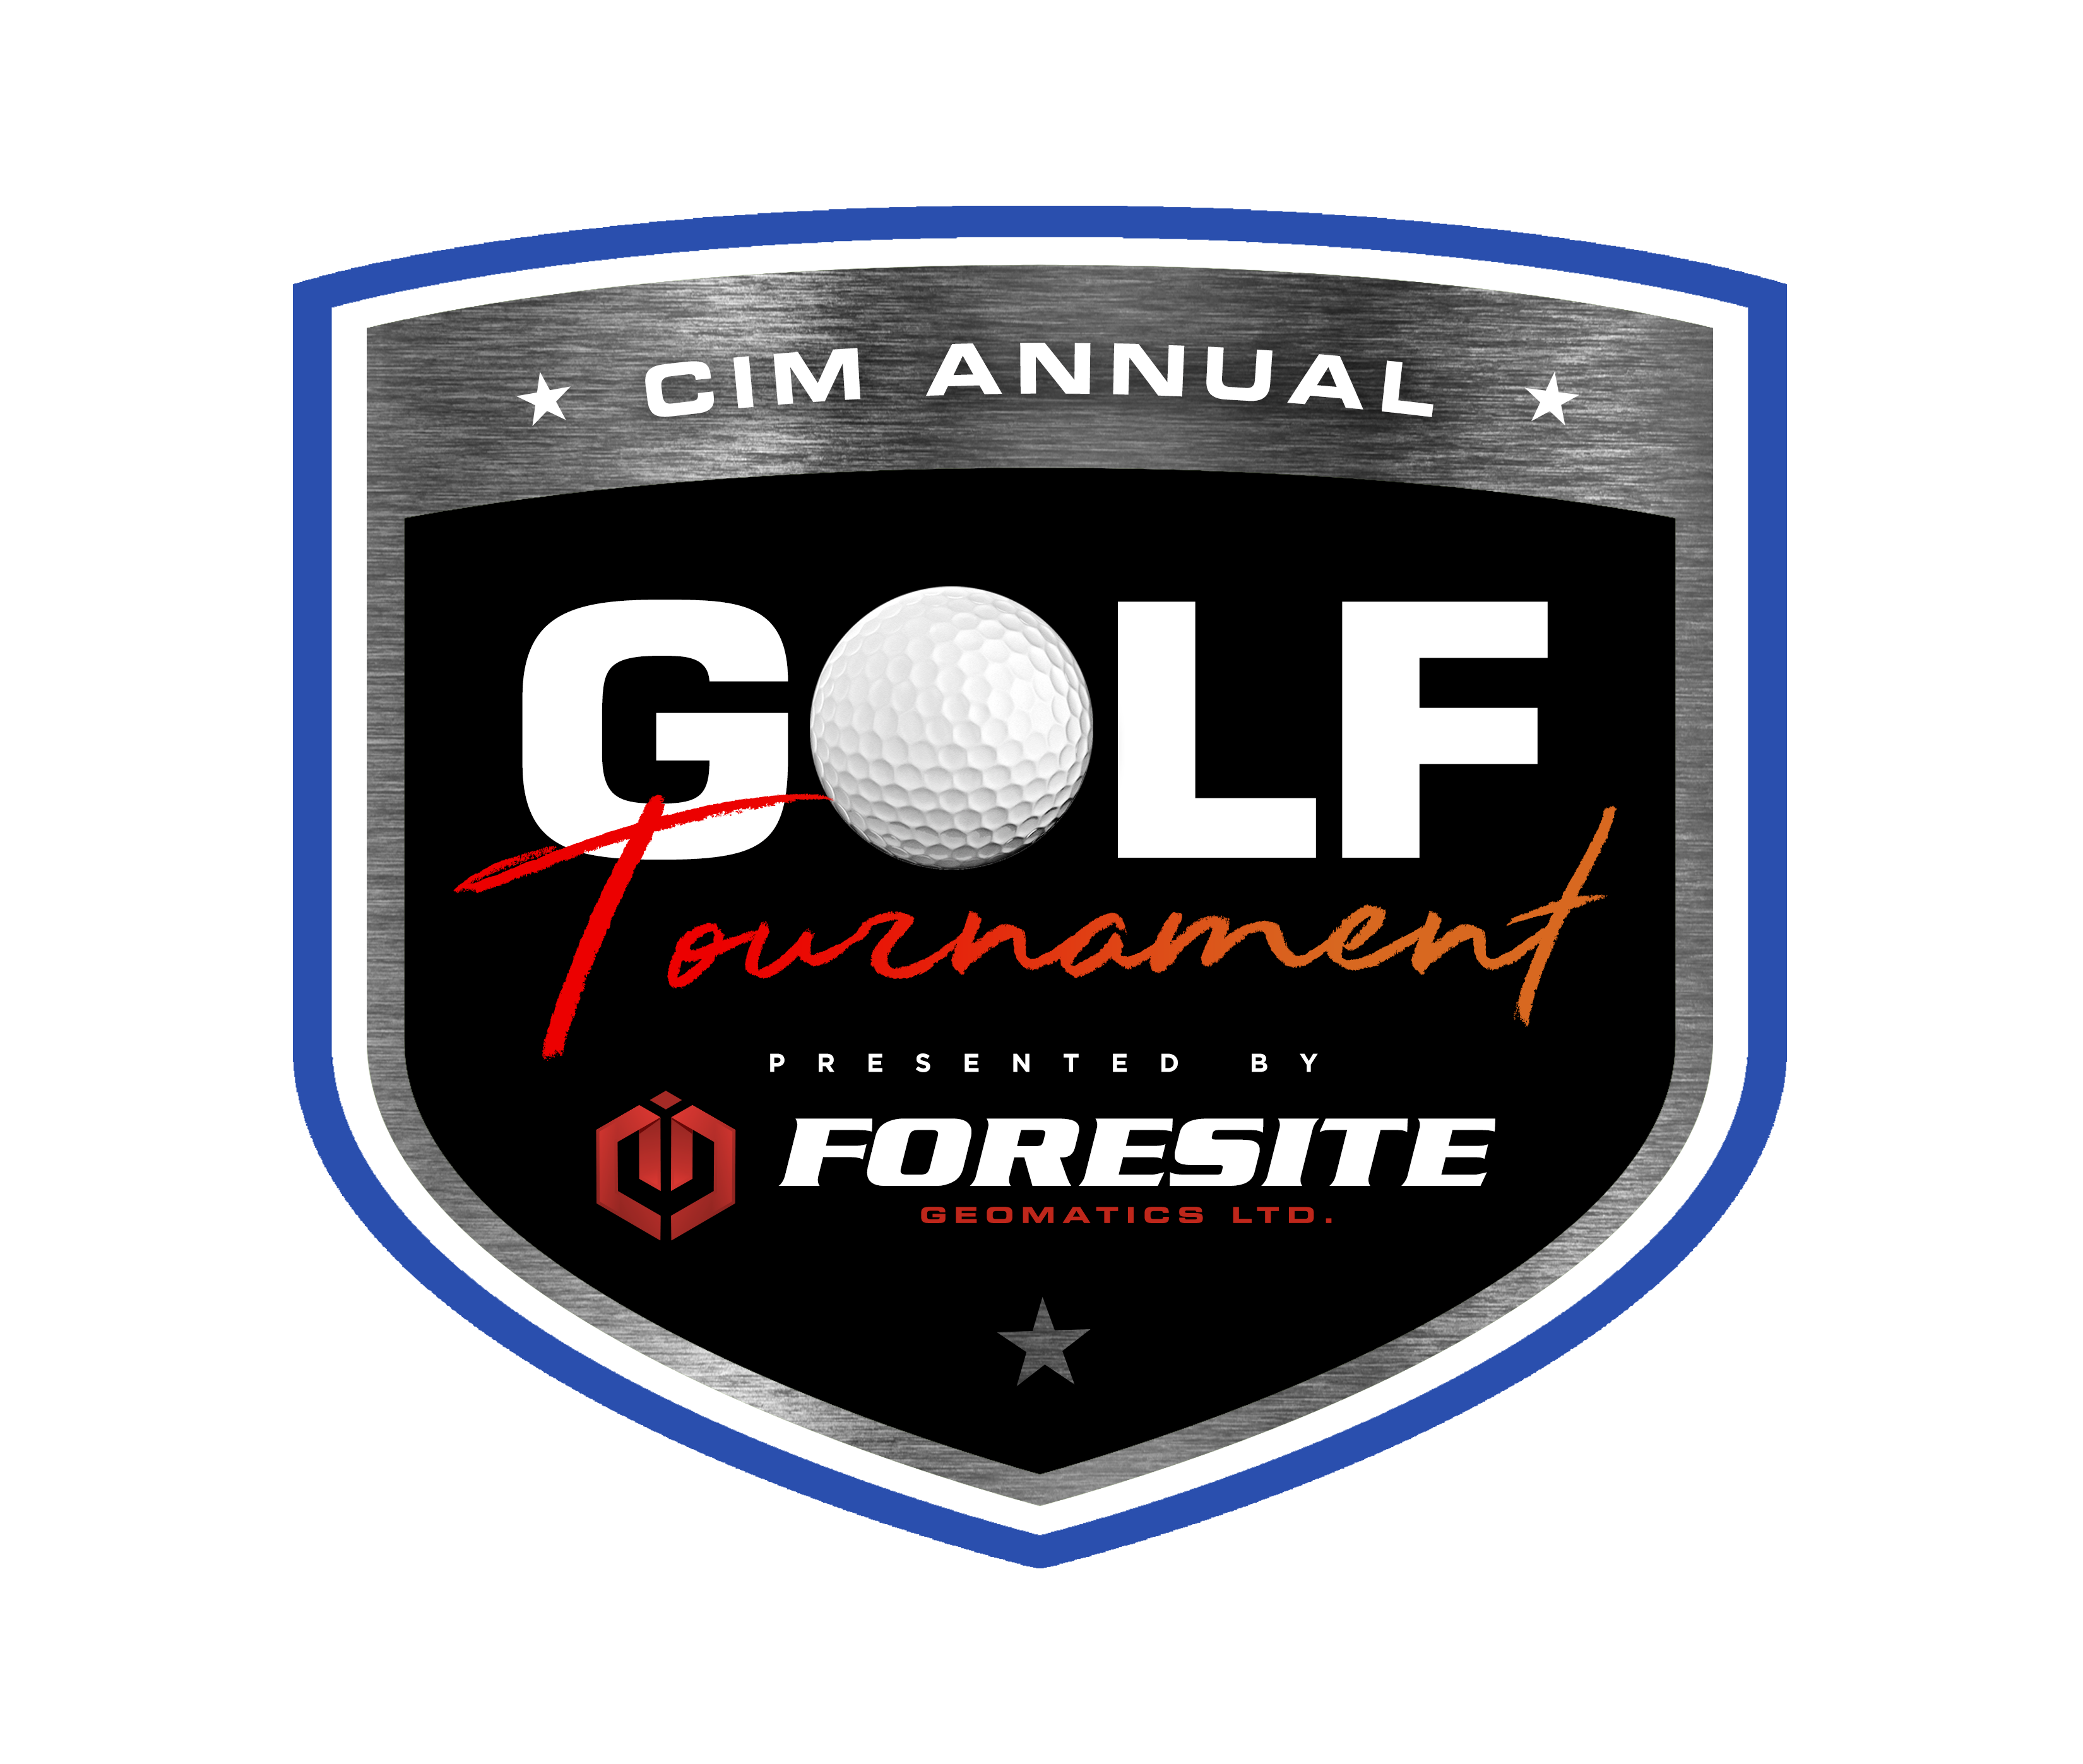 CIM Golf Tournament, presented by Foresite Geomatics Ltd.